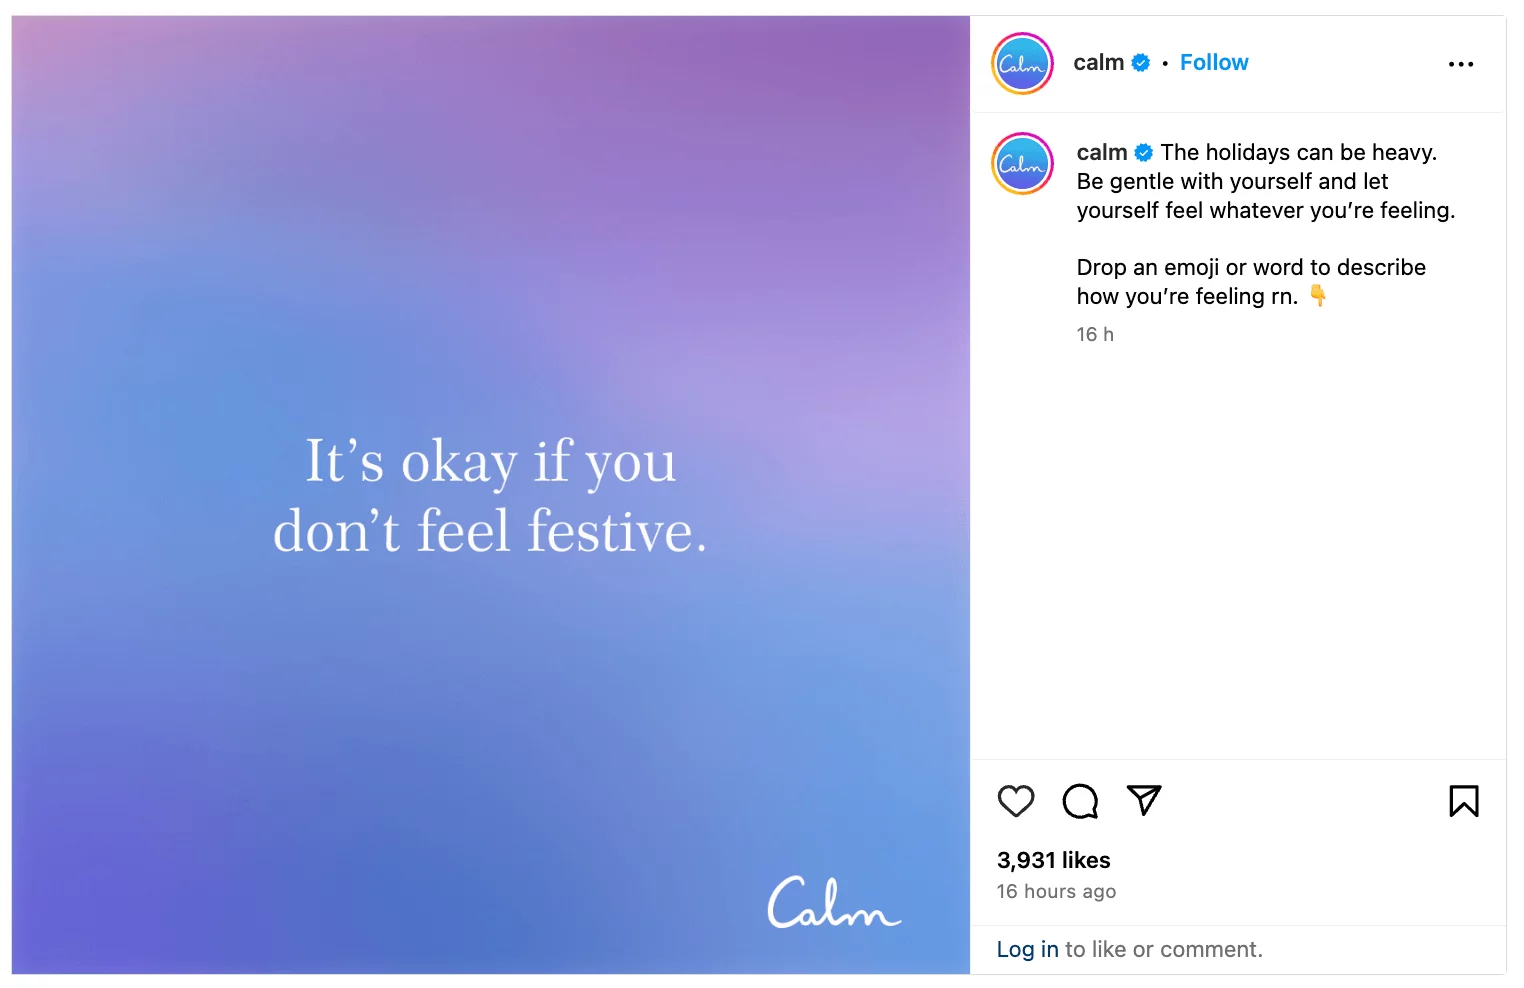 Calm's seasonal Instagram post 